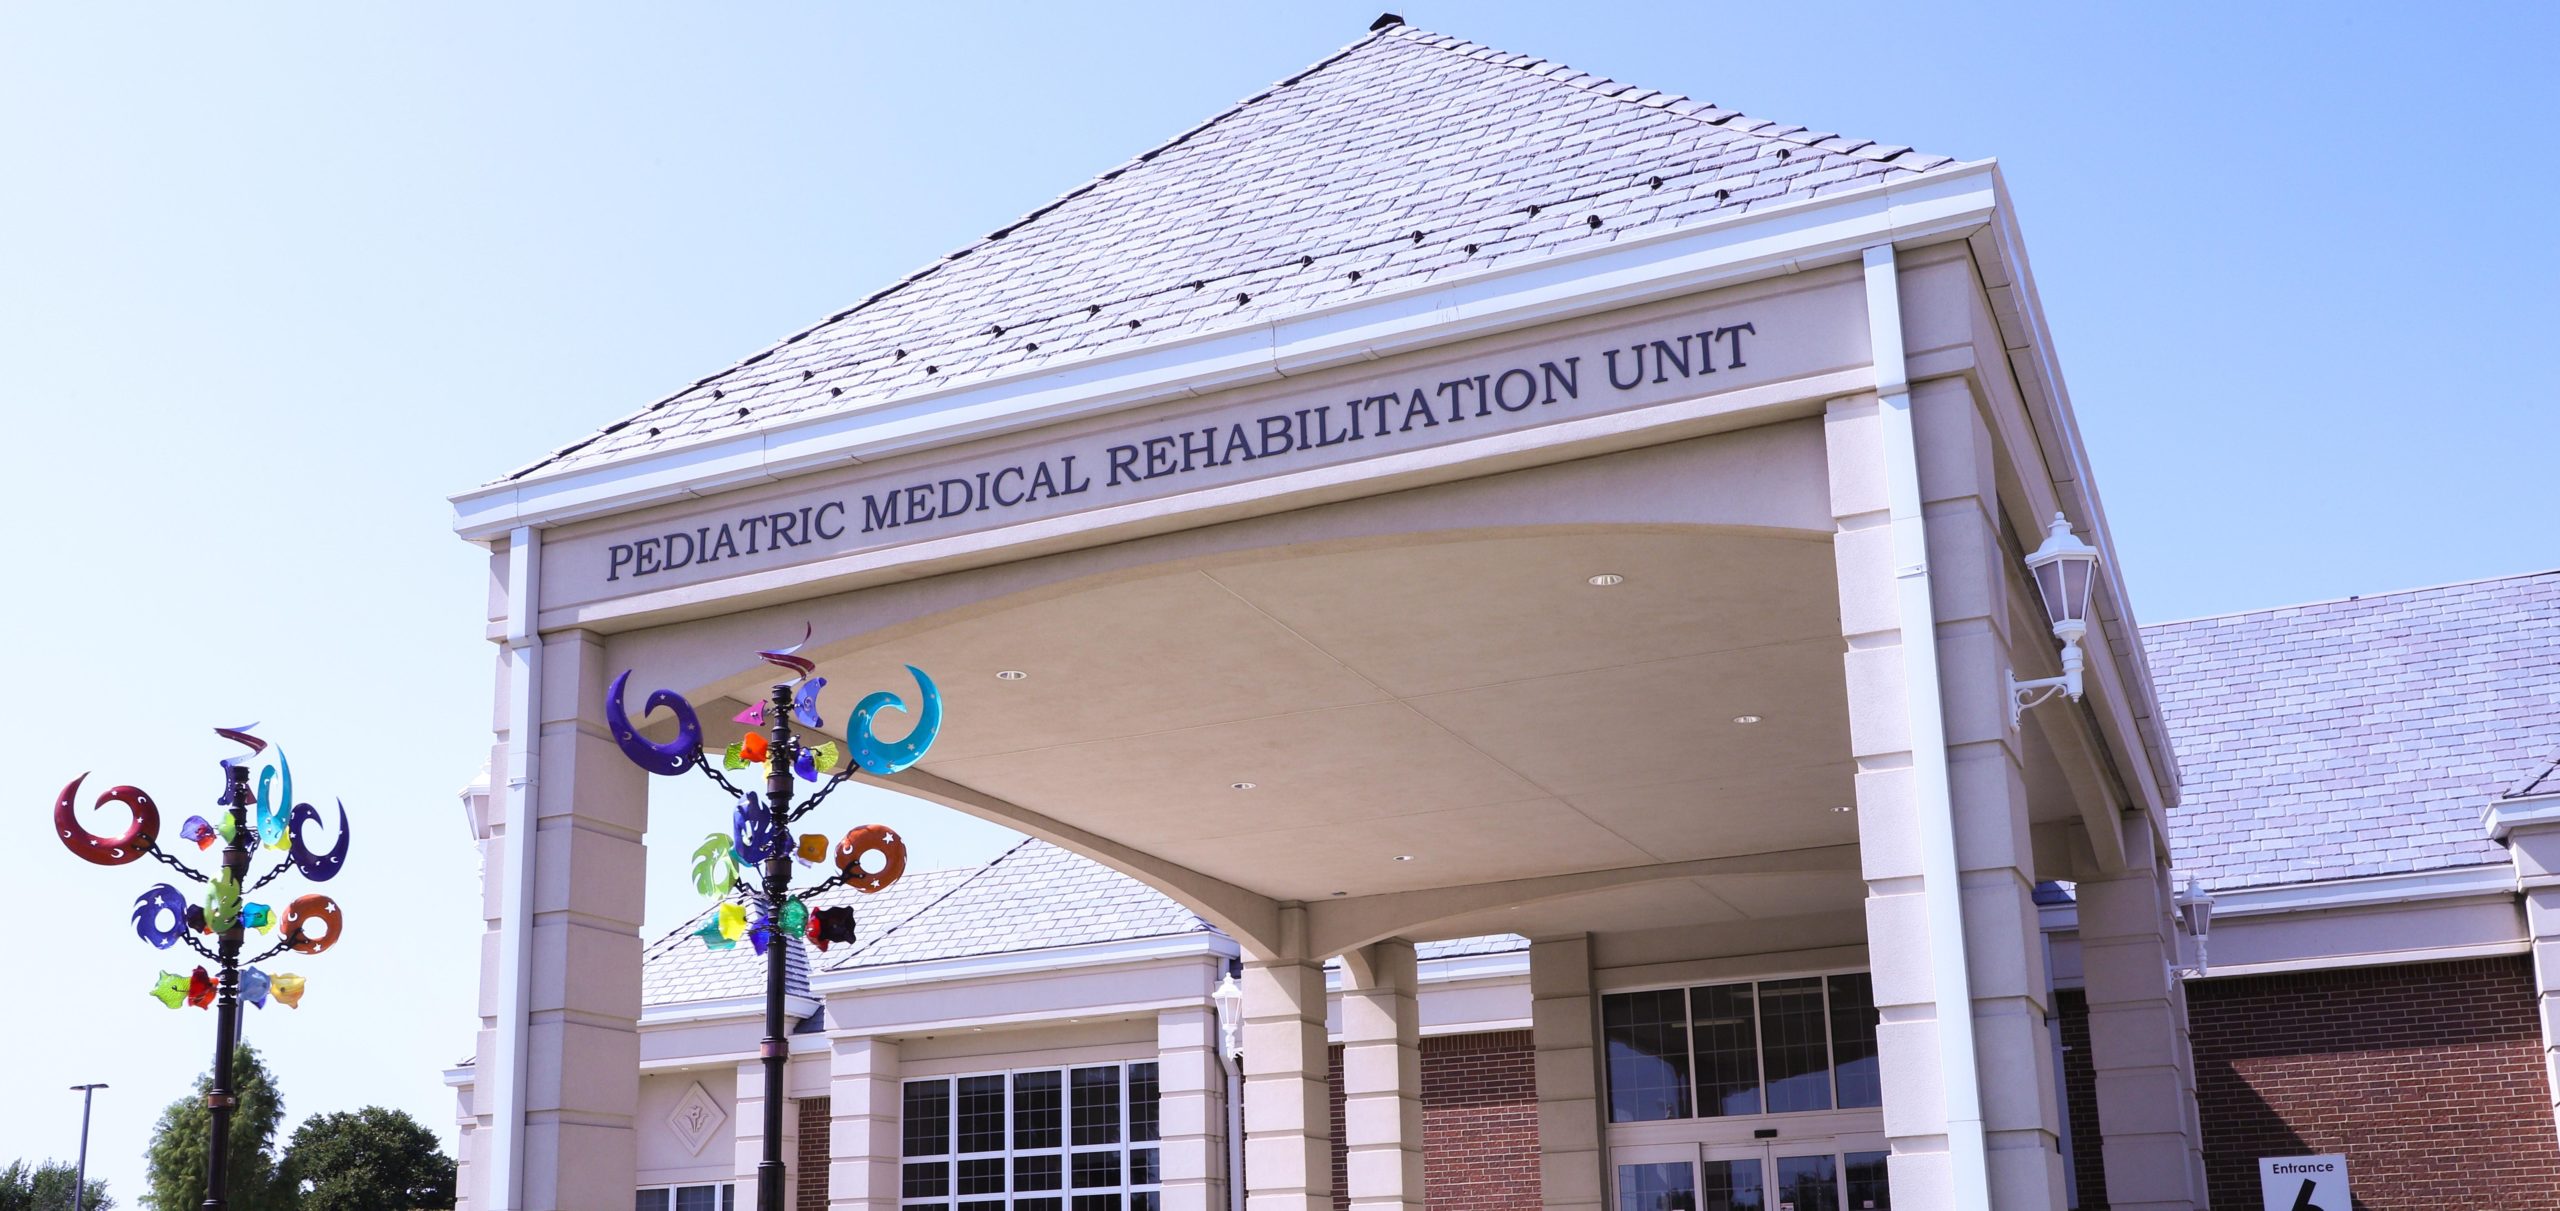 Pediatric Medical Rehabilitation